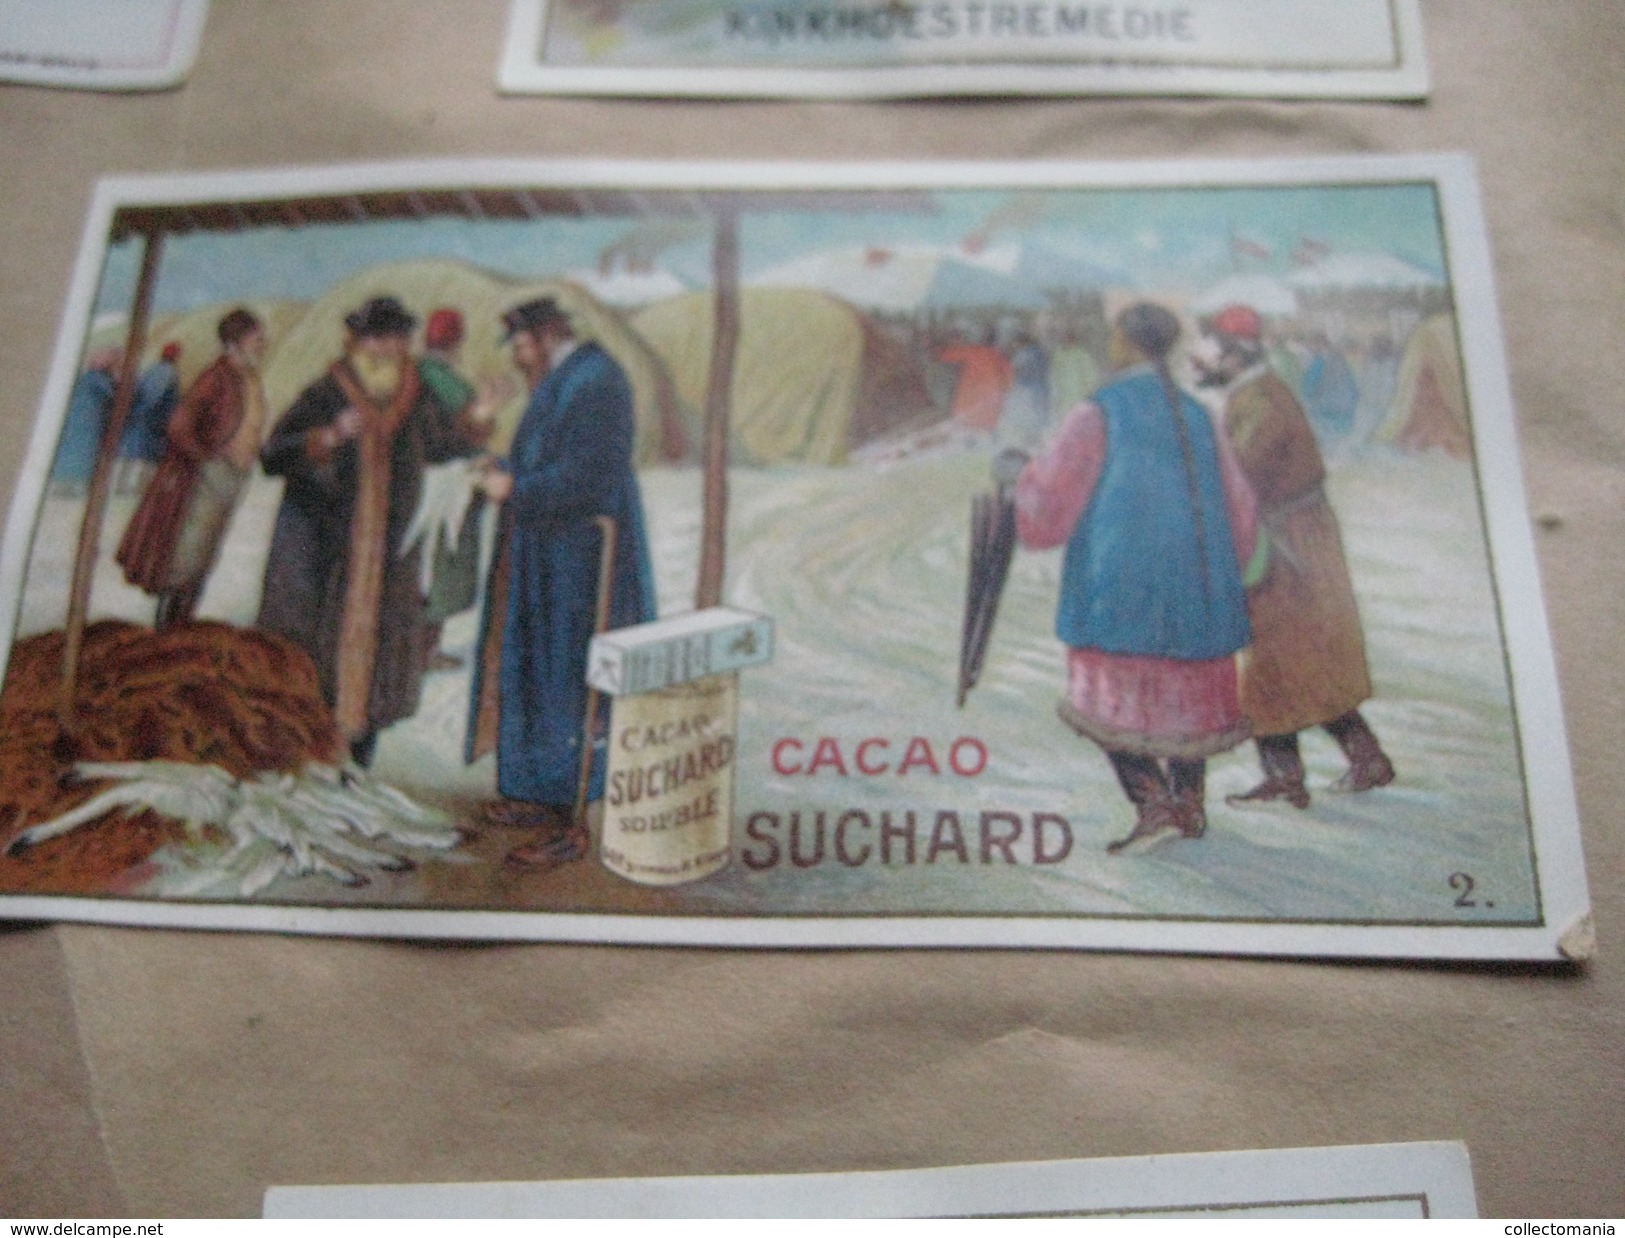 eAlbum around 1890, 100rds litho advertising cards, some compl. sets, hundreds of trade cards : Hunley & Palmer, Suchard